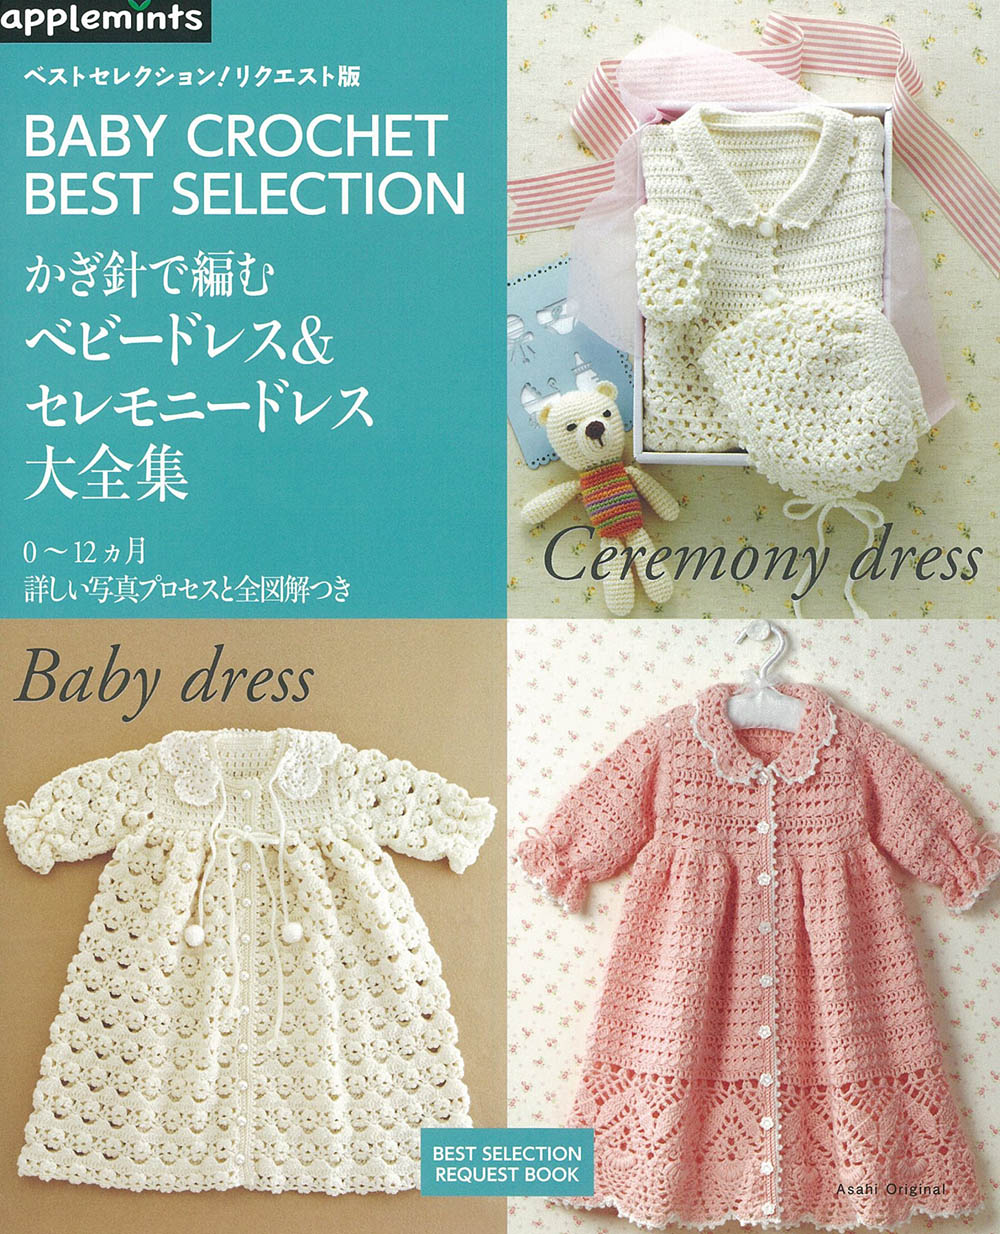 Ceremony & baby dress Best Crochet Selection